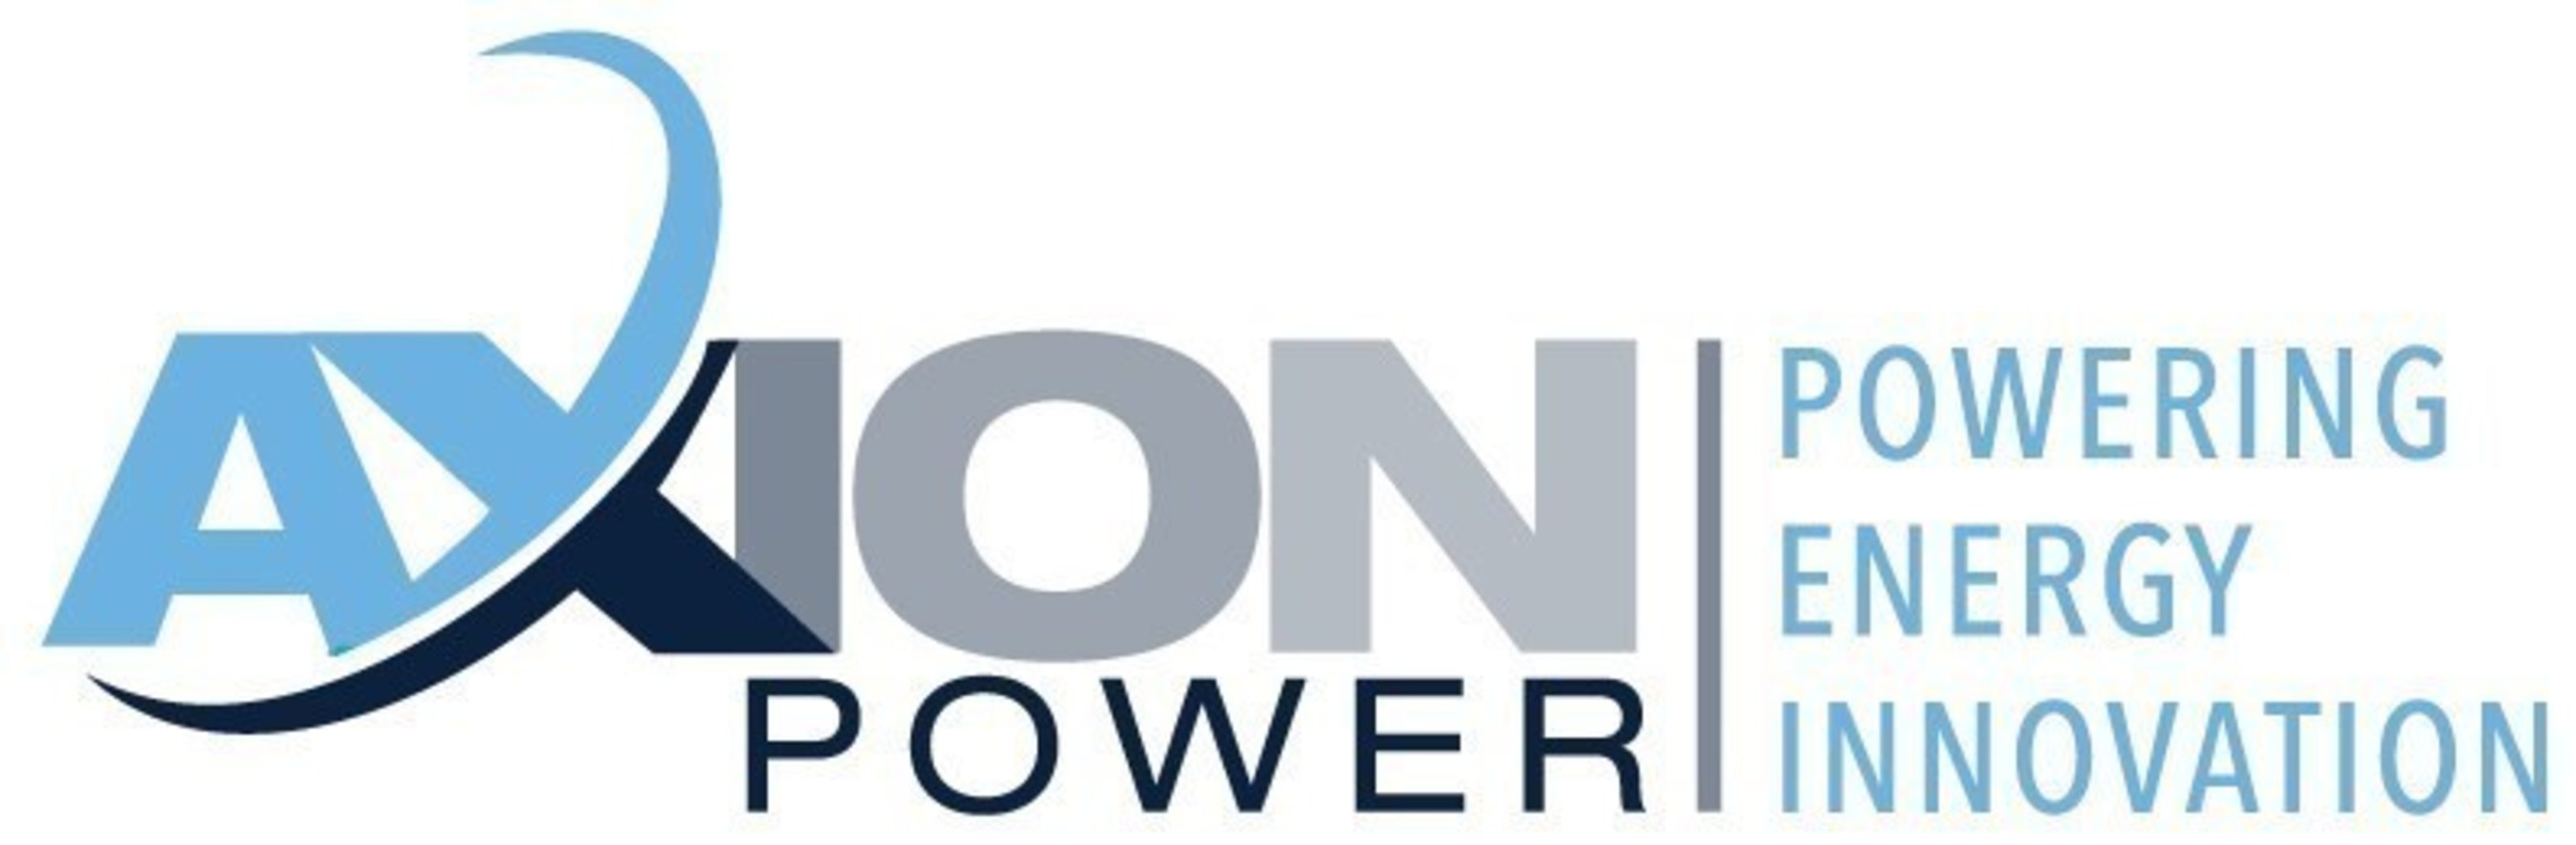 Axion Power International